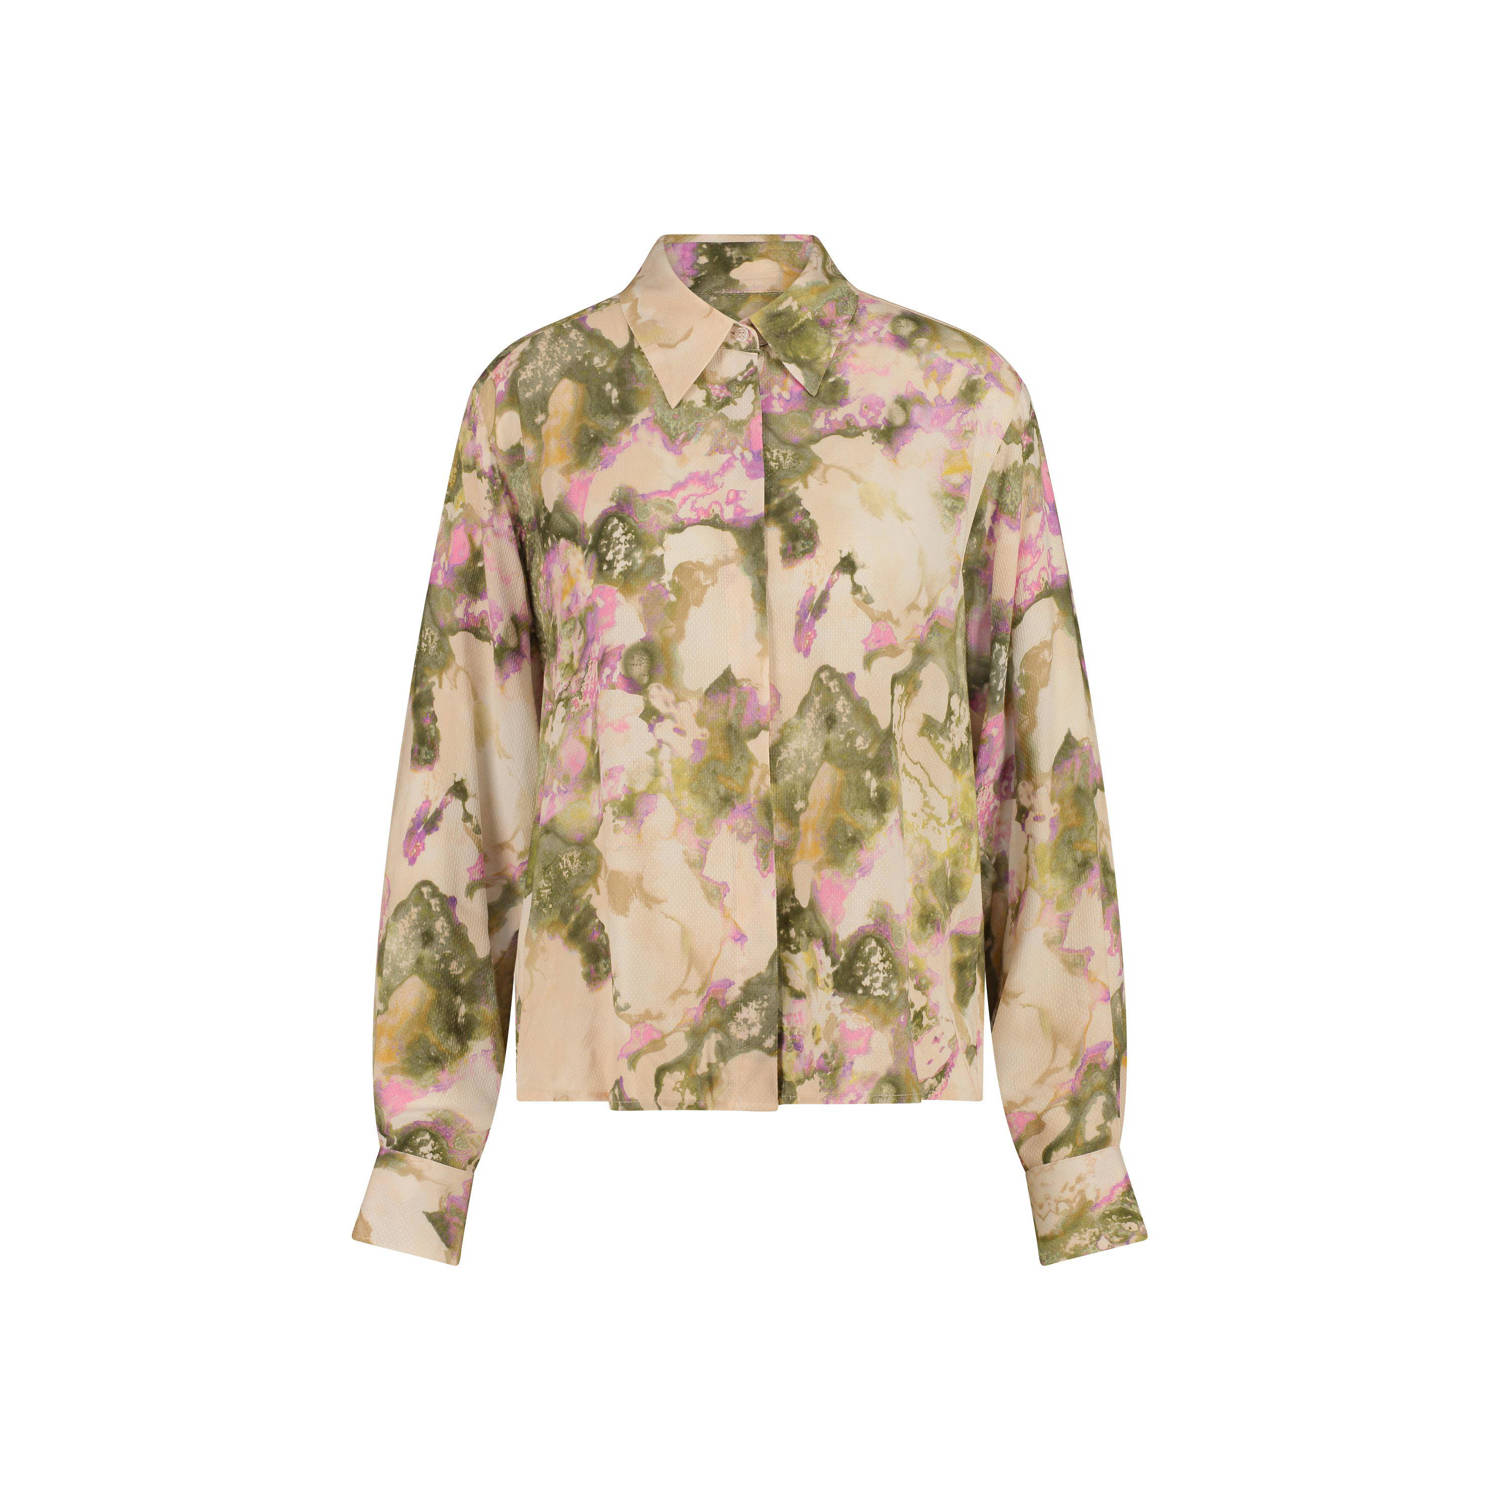 Claudia Sträter blouse met jacquard beige roze groen